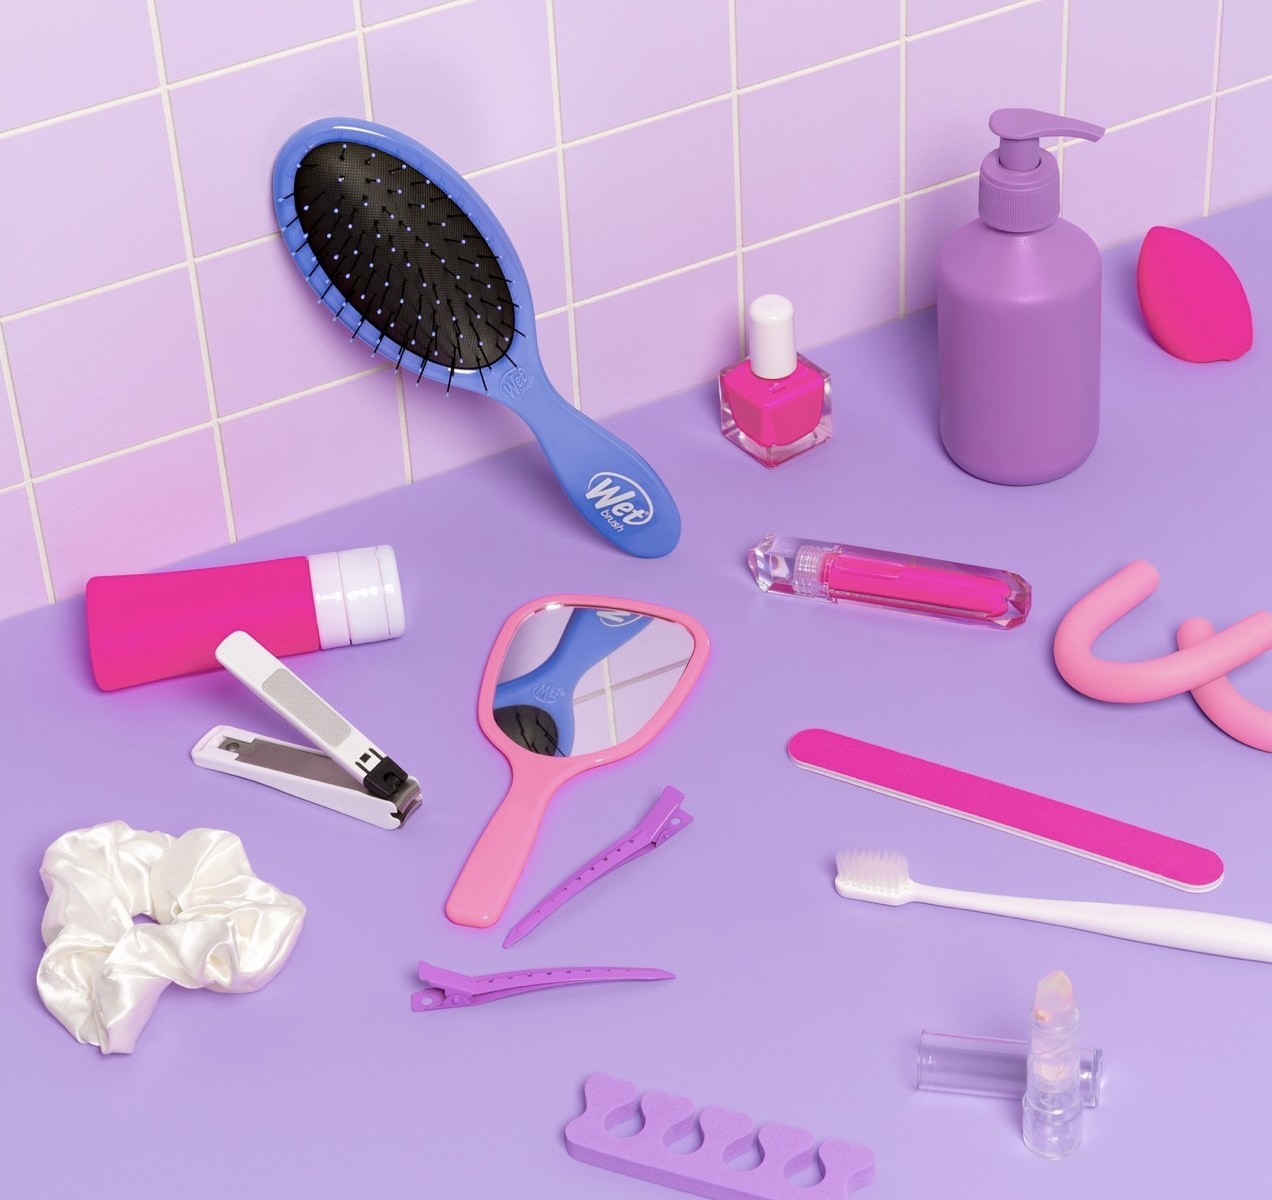 A purple hair brush, a mirror, nail file, nail clip, toothbrush, pink nail polish, a beauty blender, and a scrunchie